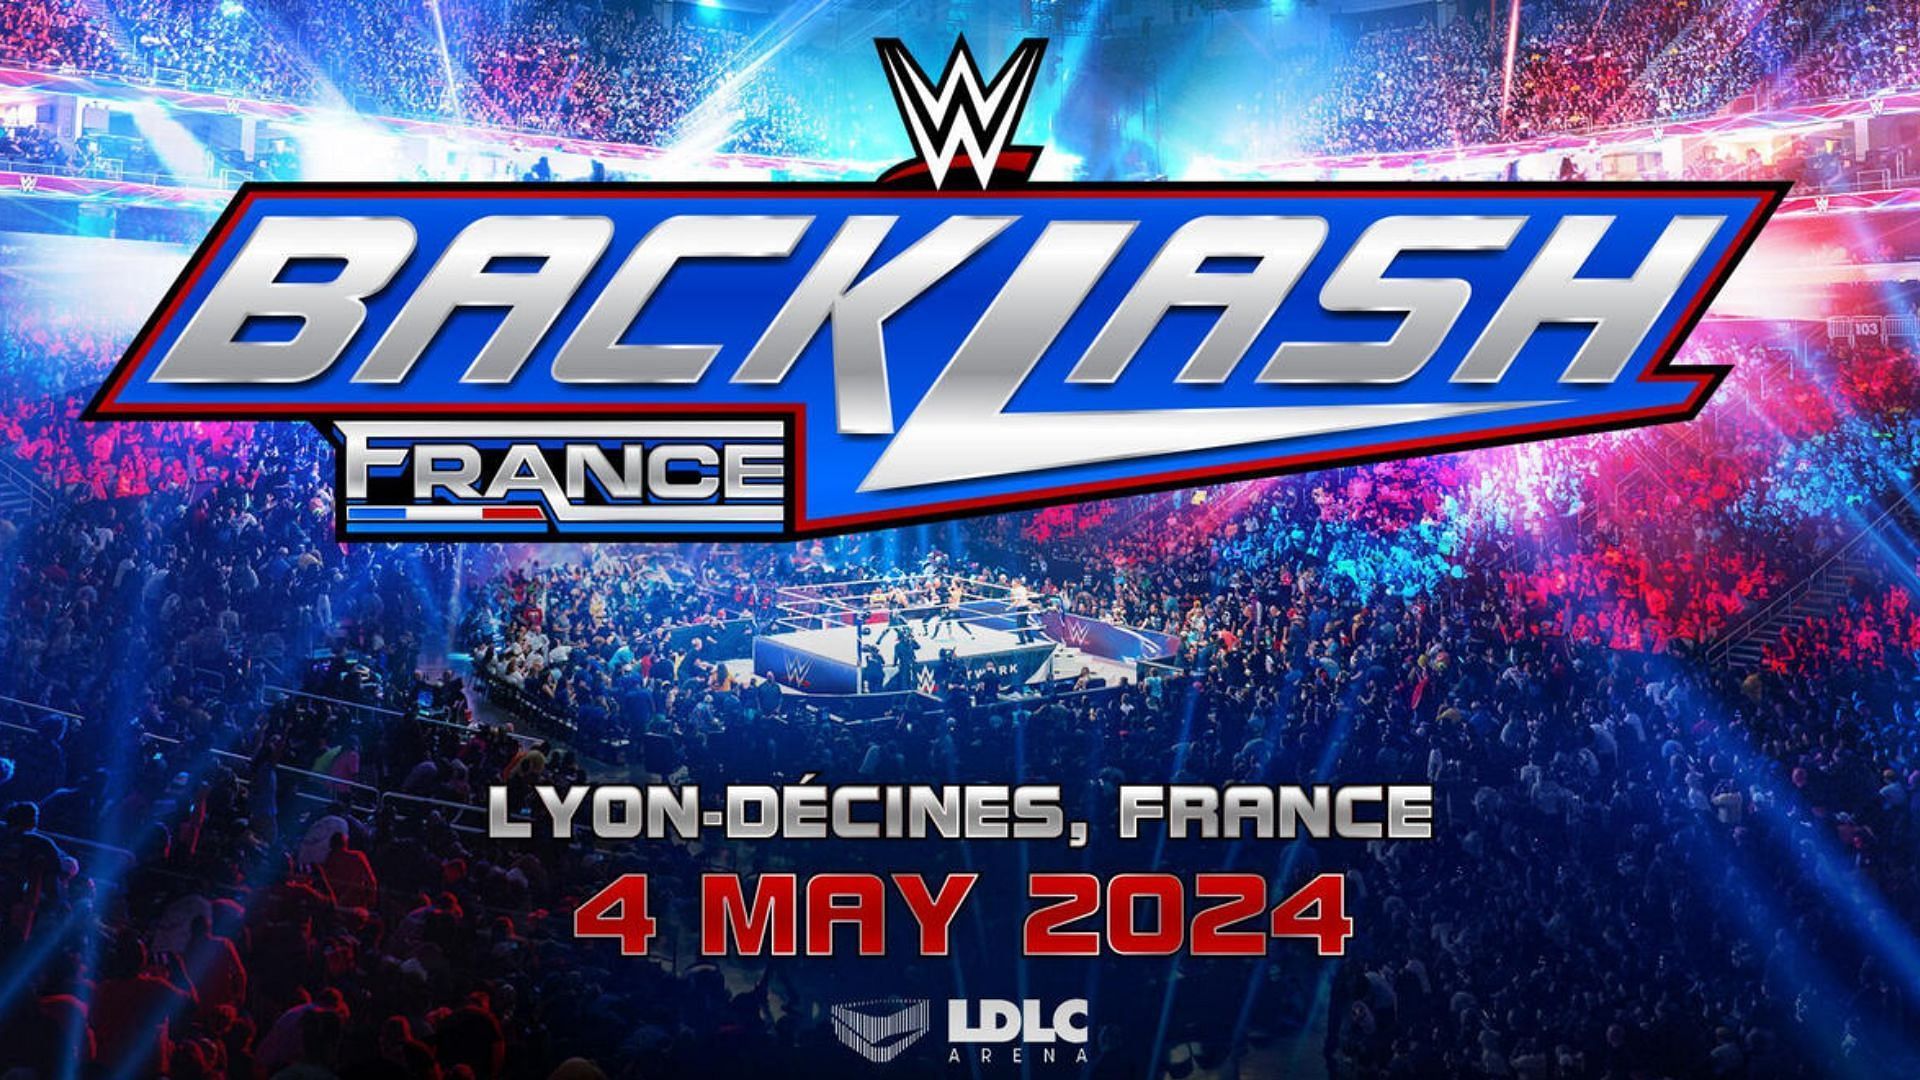 Backlash will air tomorrow in France.